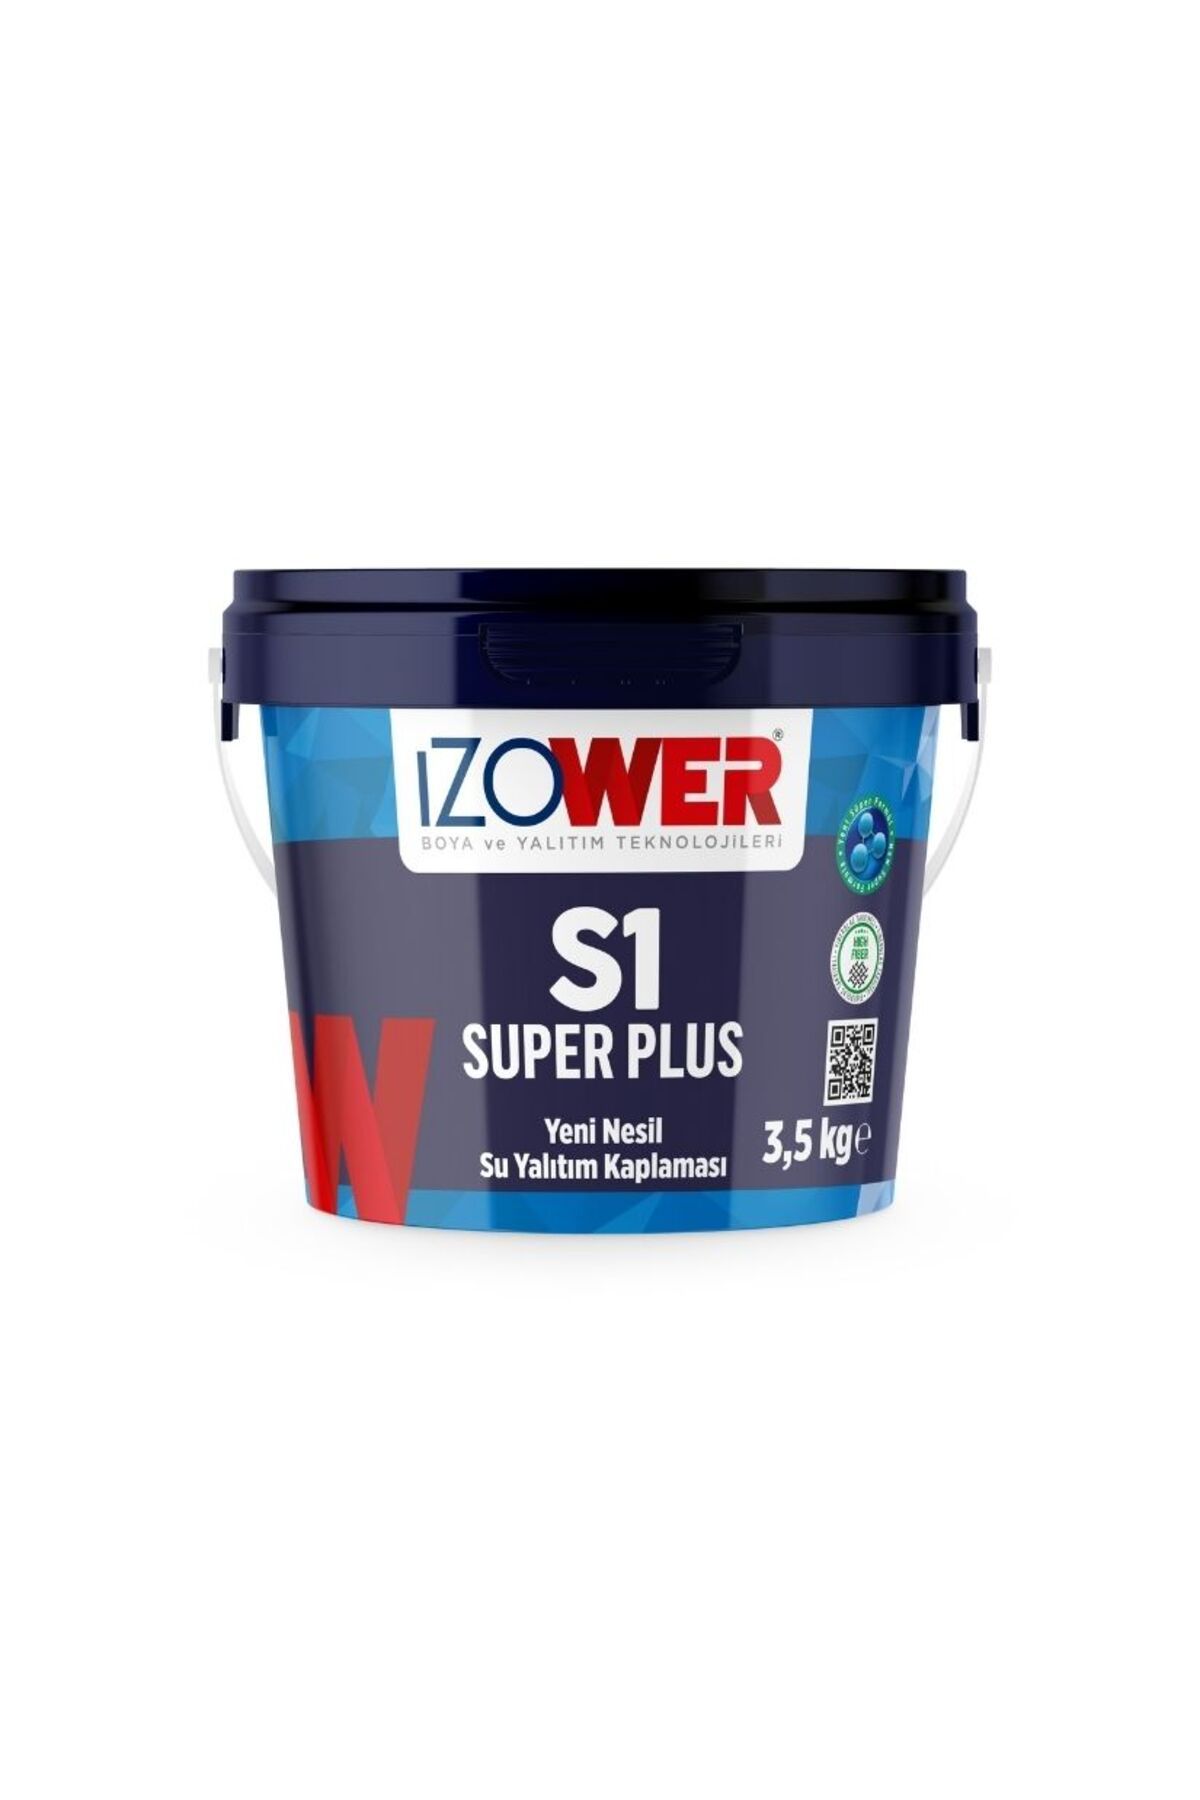 izower S1 Süper Plus Su Yalıtım Kaplaması- Gri- 3.5 Kg